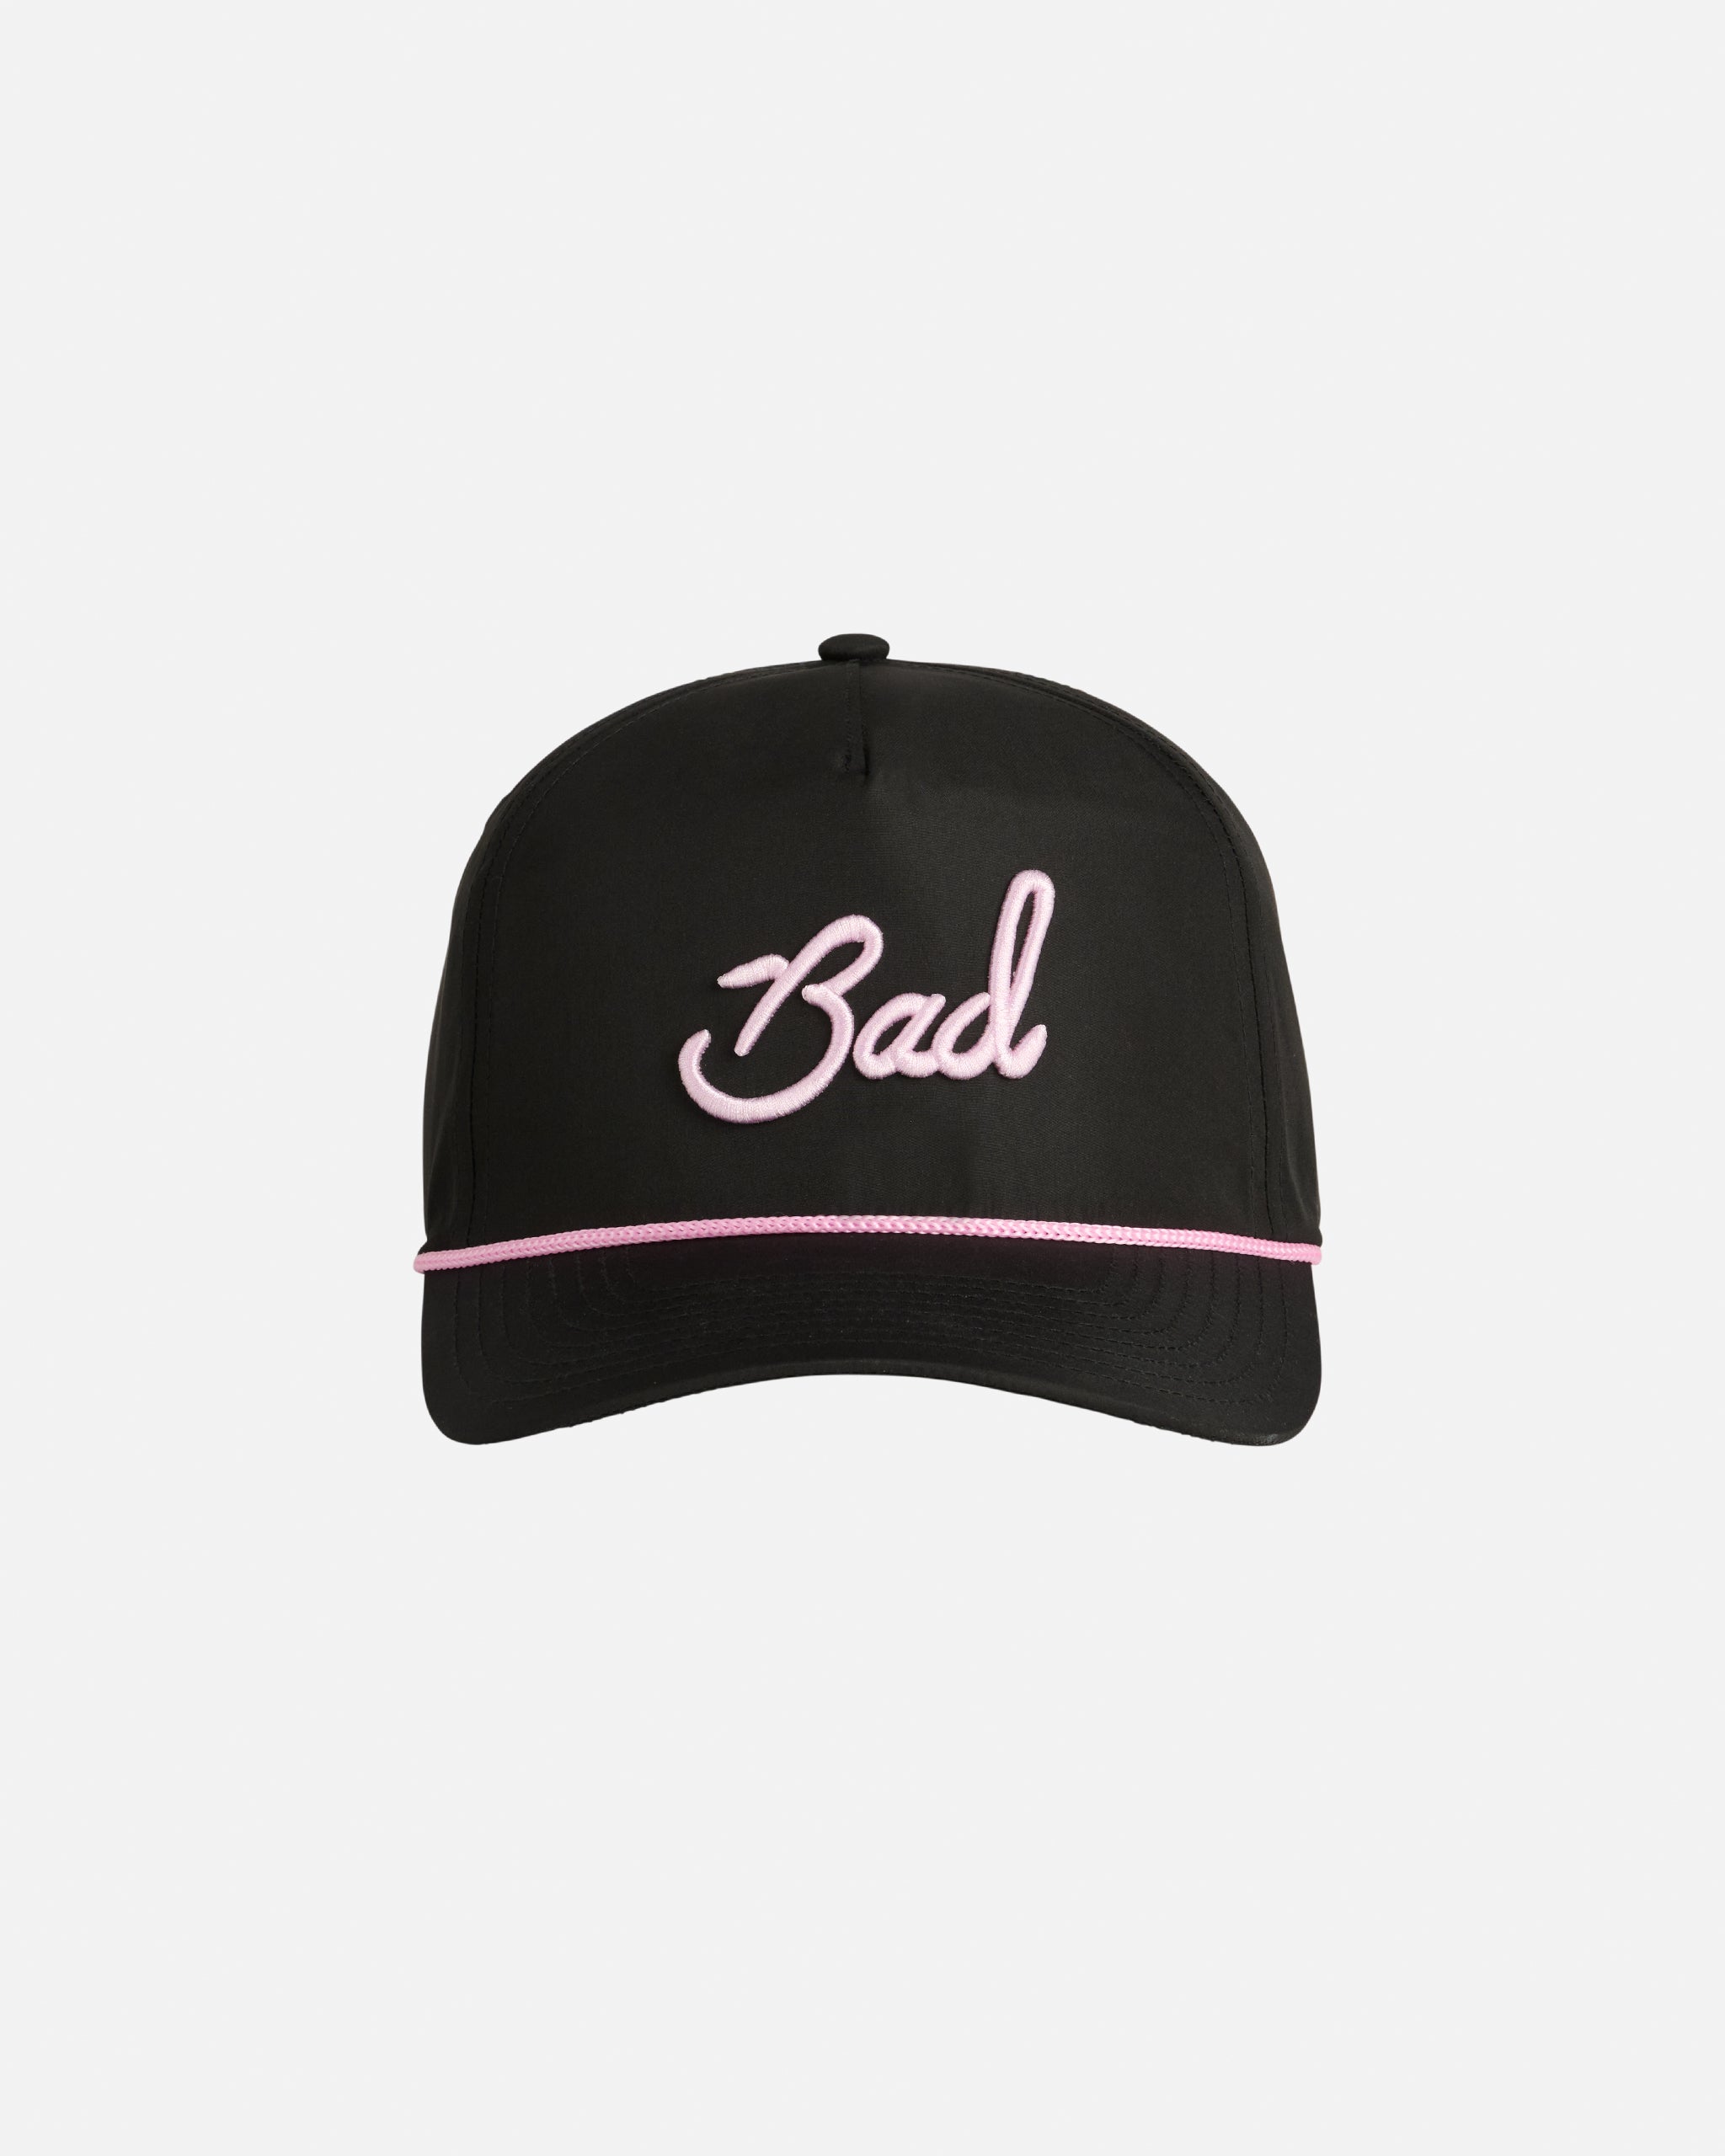 "Bad" Rope Hat - Black/Blossom - Bad Birdie